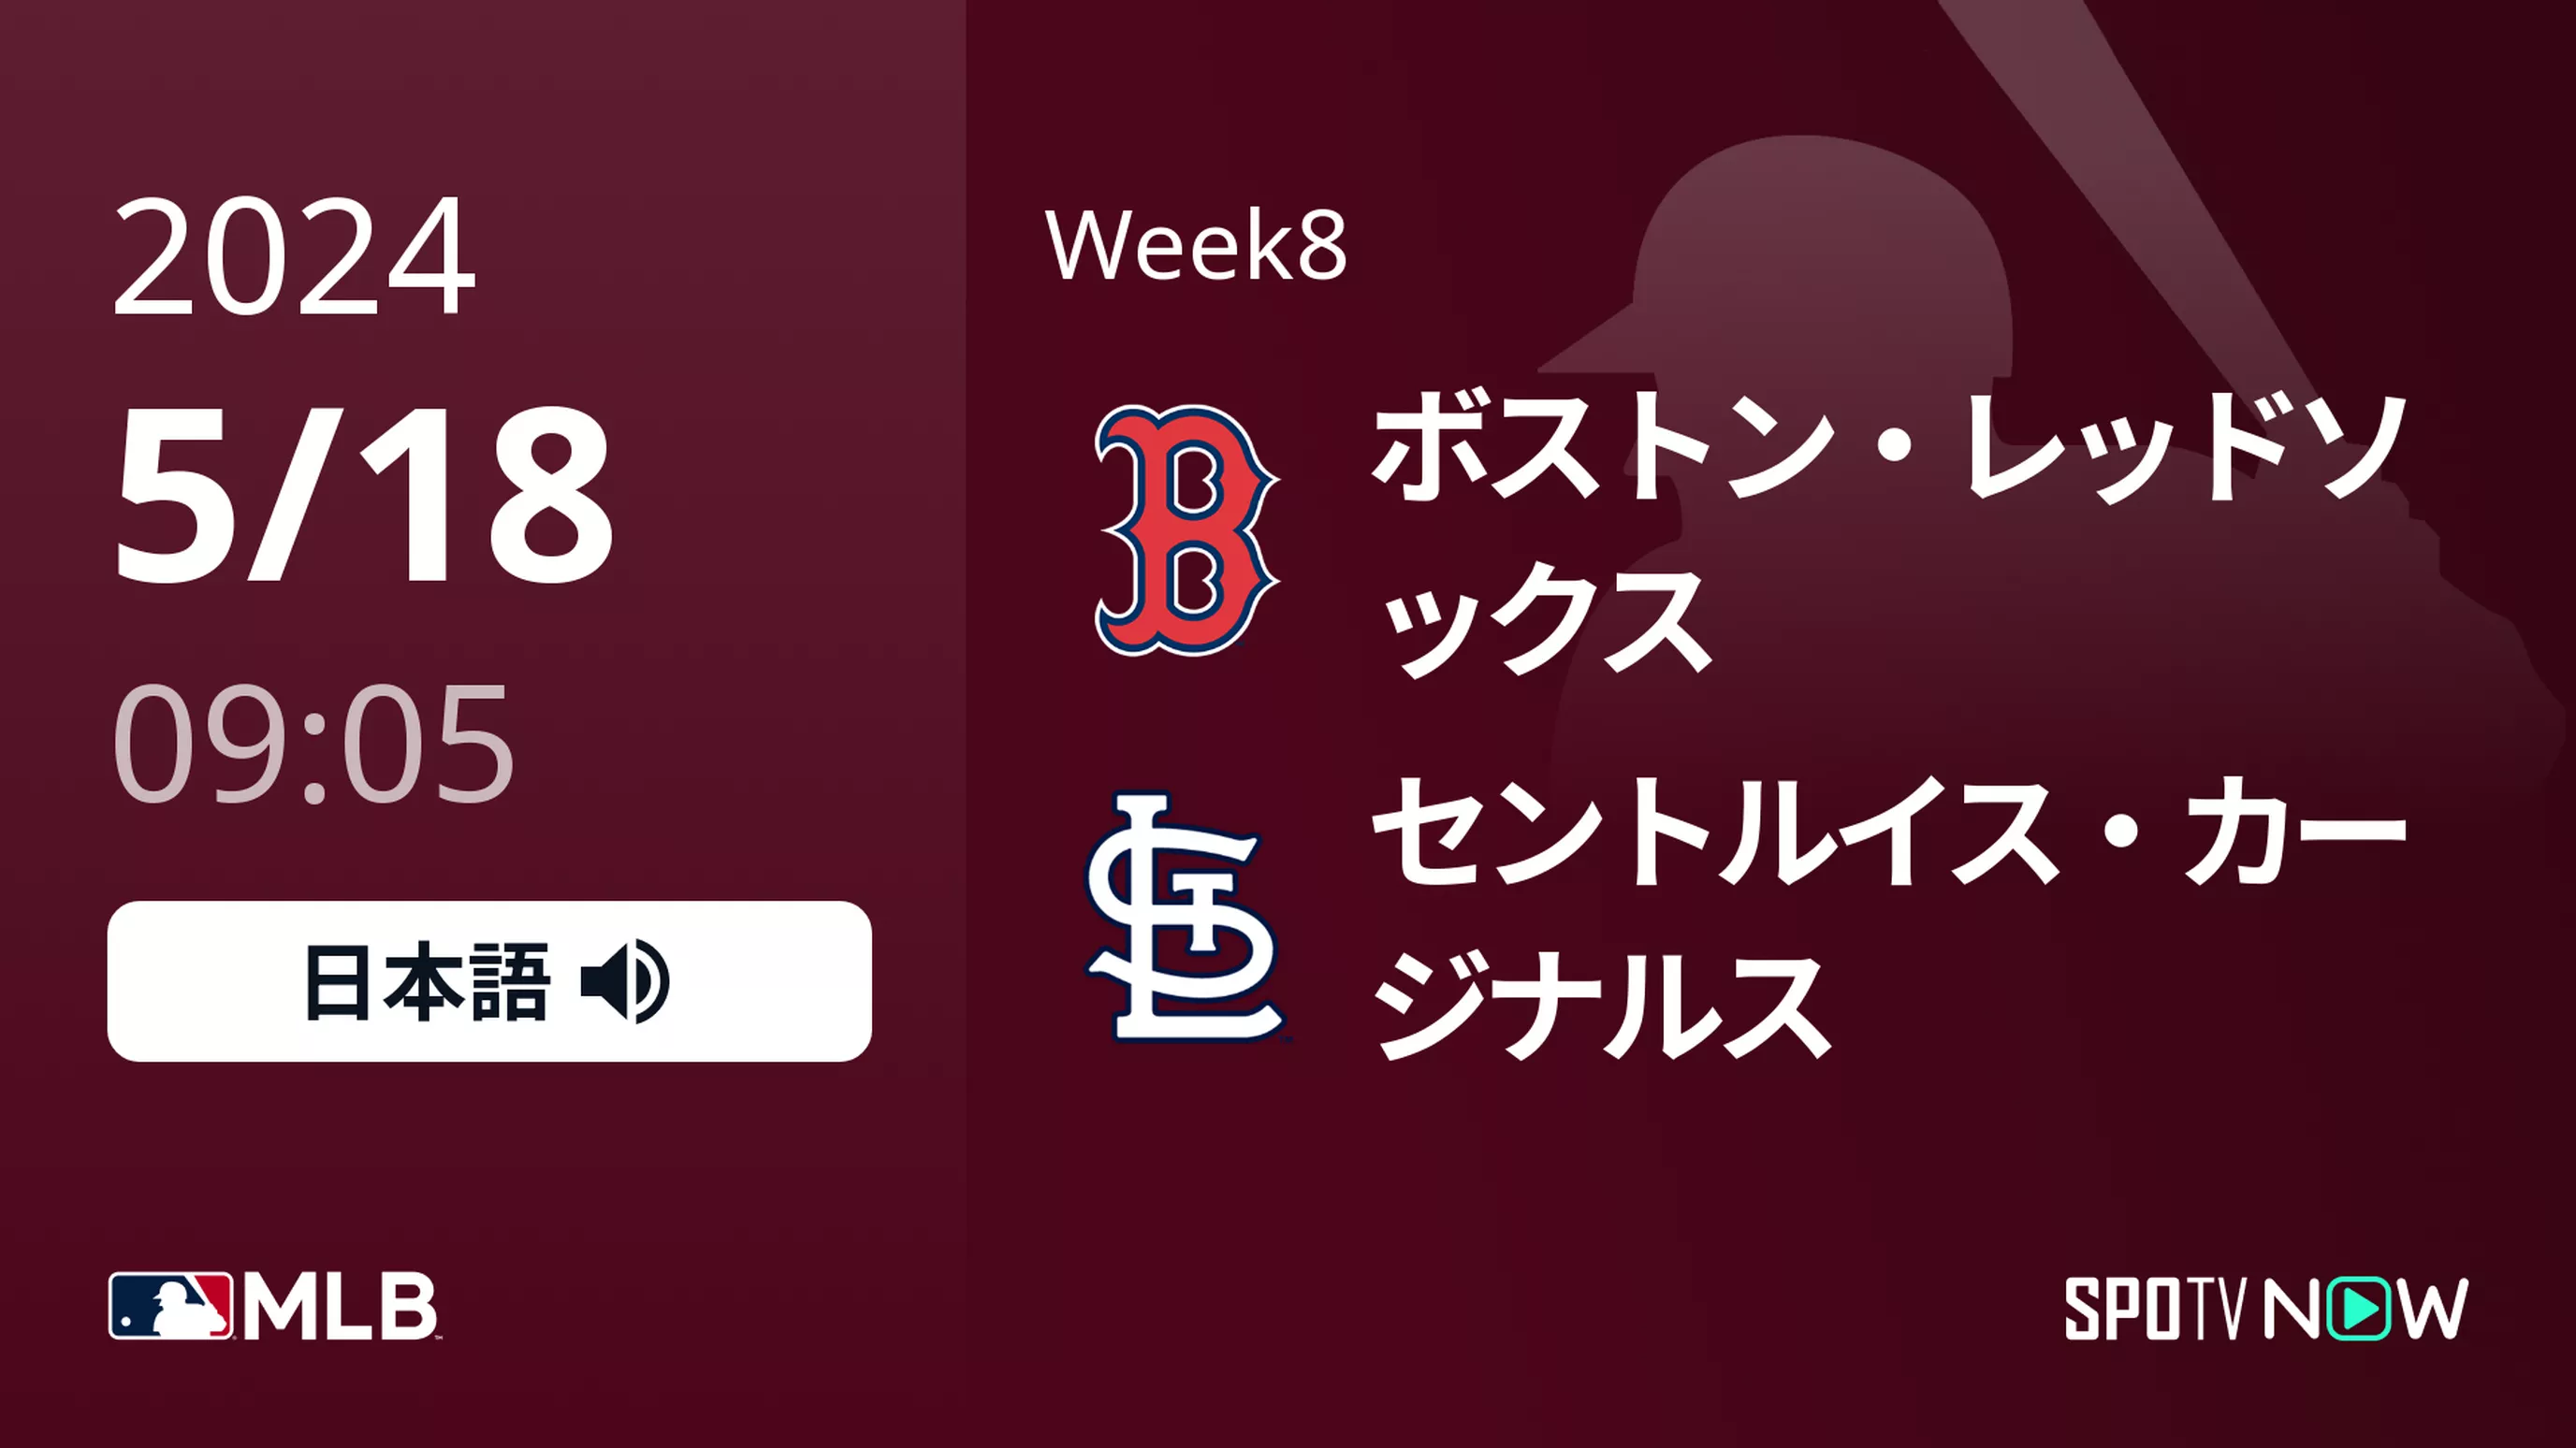 Week8 Rソックス vs カージナルス 5/18[MLB]